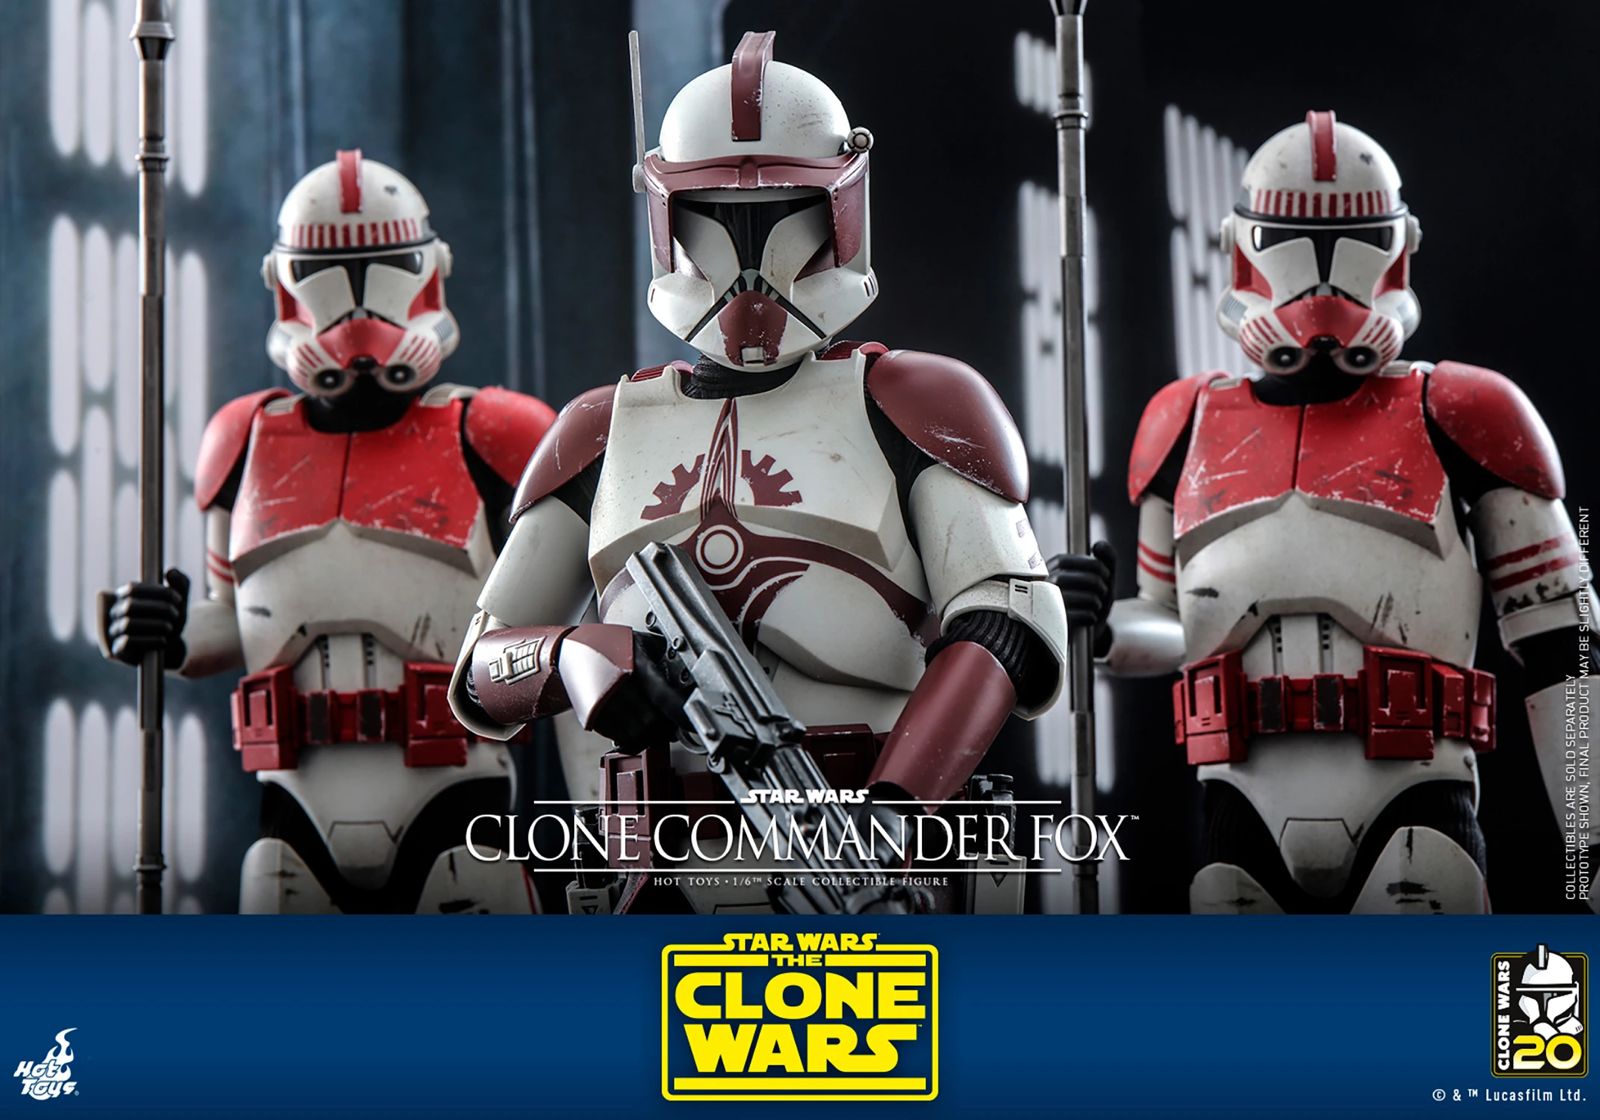 Hot Toys Star Wars Clone Commander Fox